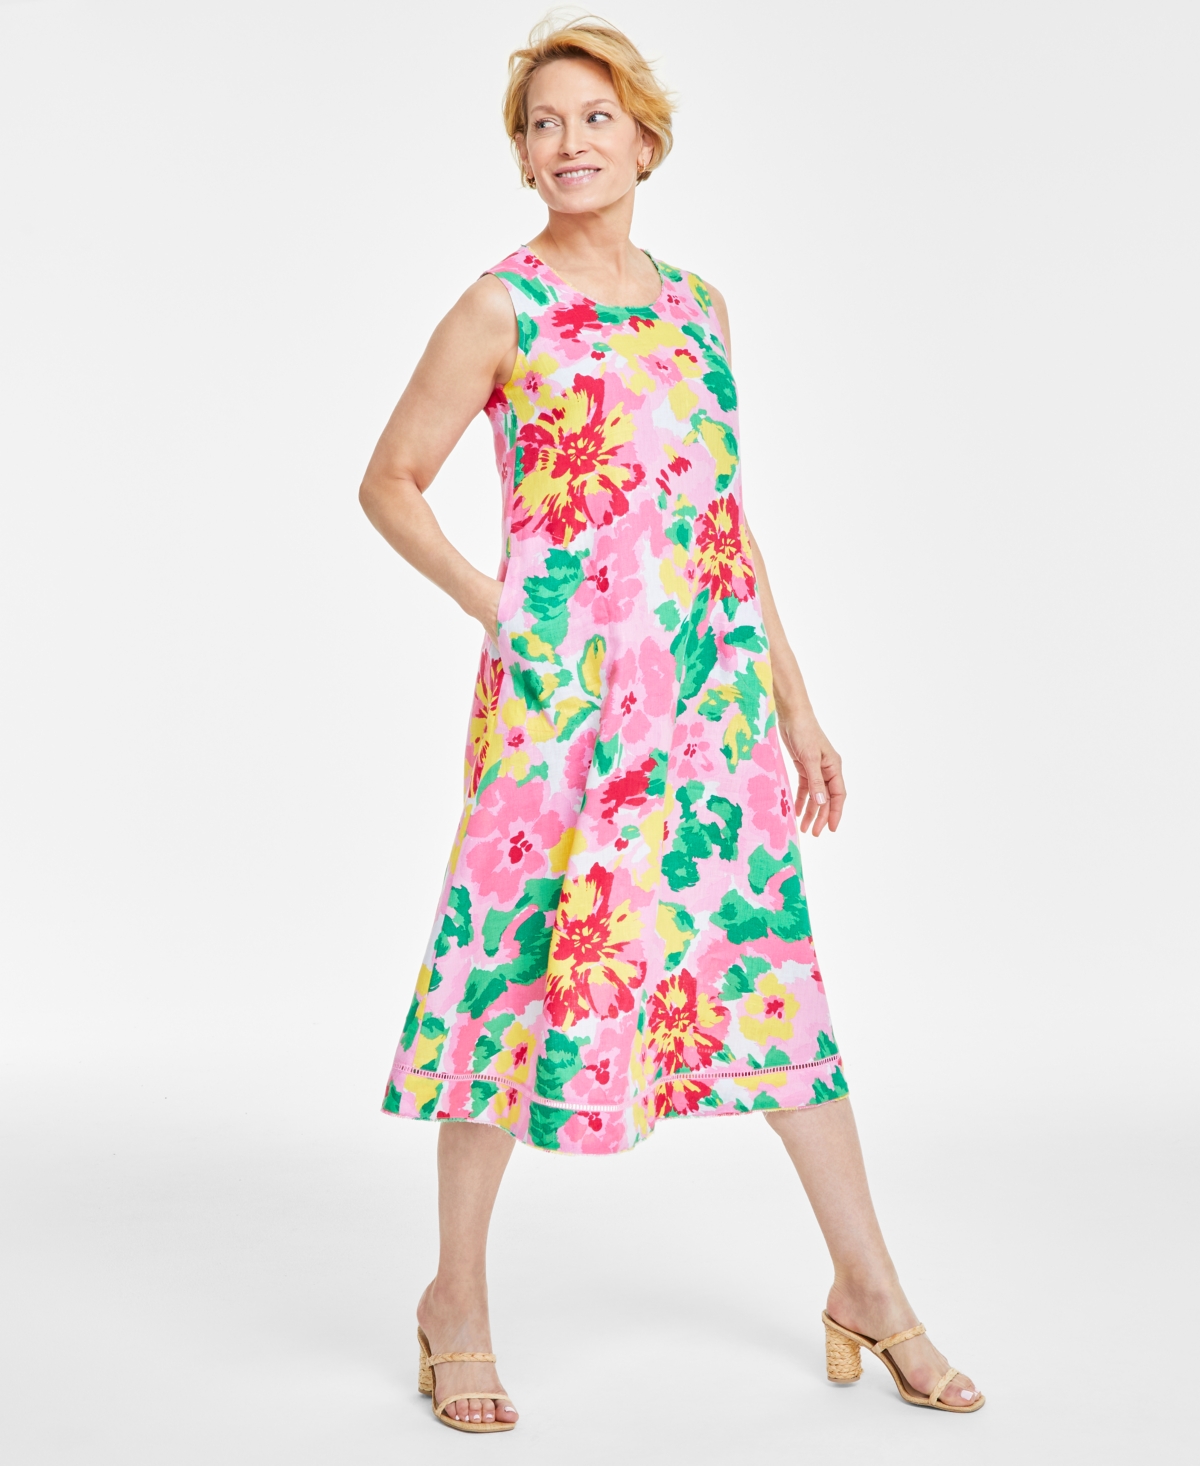 Women's 100% Linen Floral-Print Woven Sleeveless Dress, Created for Macy's - Bubble Bath Combo